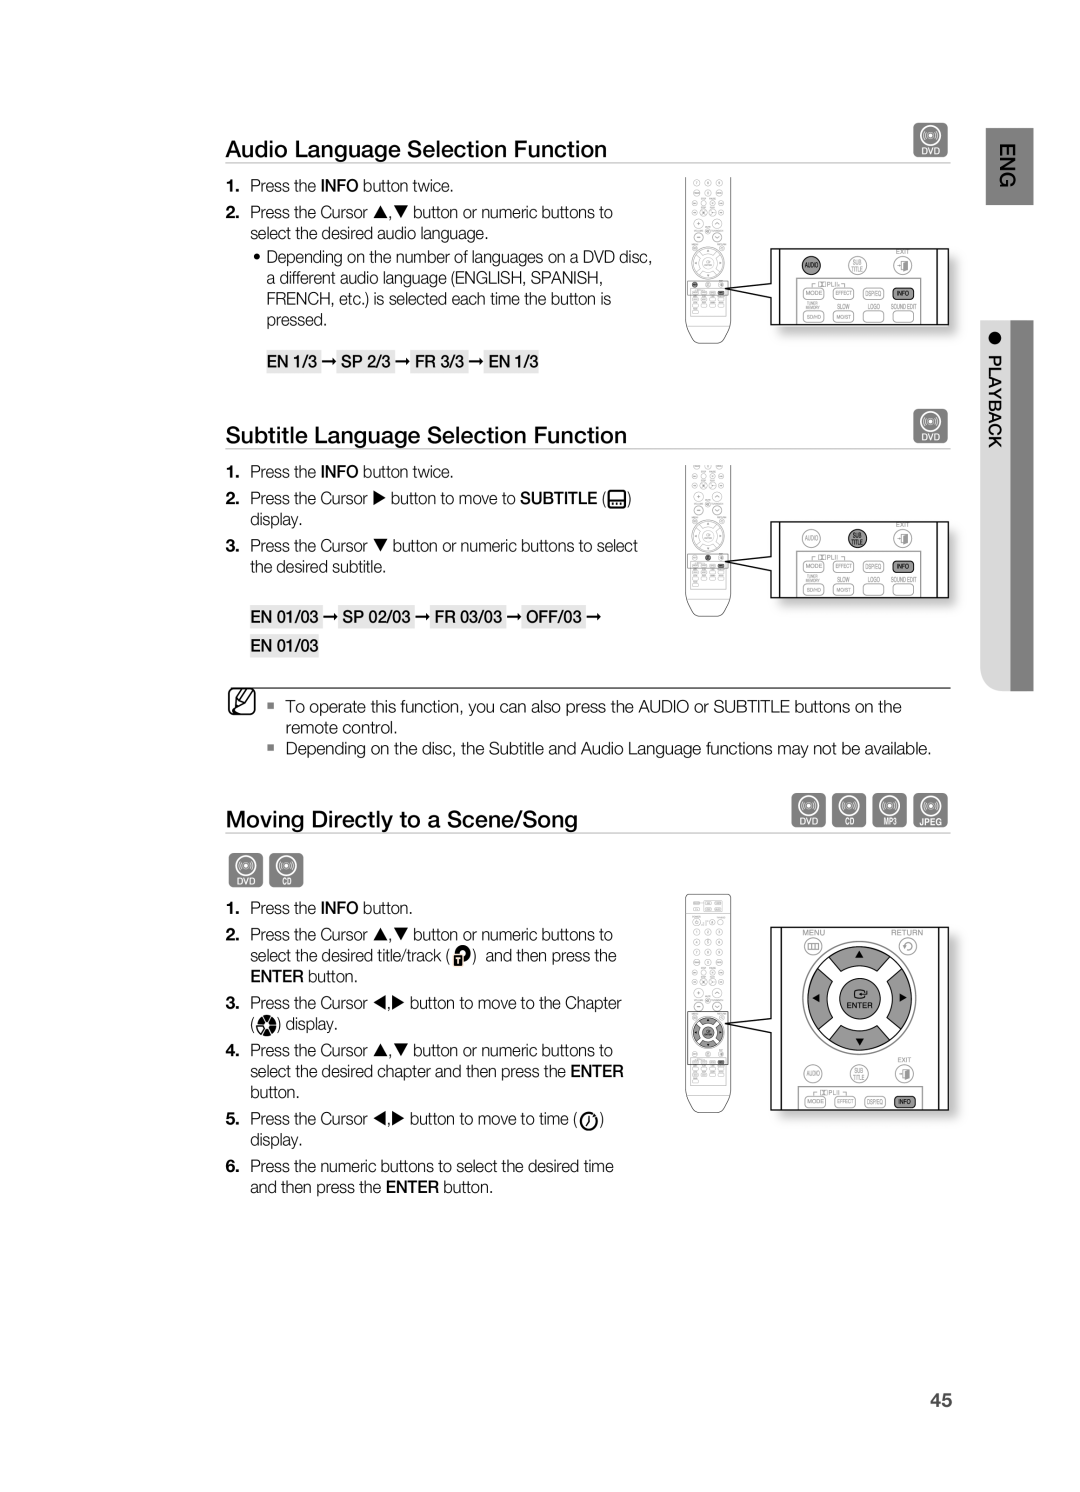 Samsung AH68-02055S manual dBAG, audio Language Selection function, Subtitle Language Selection function 